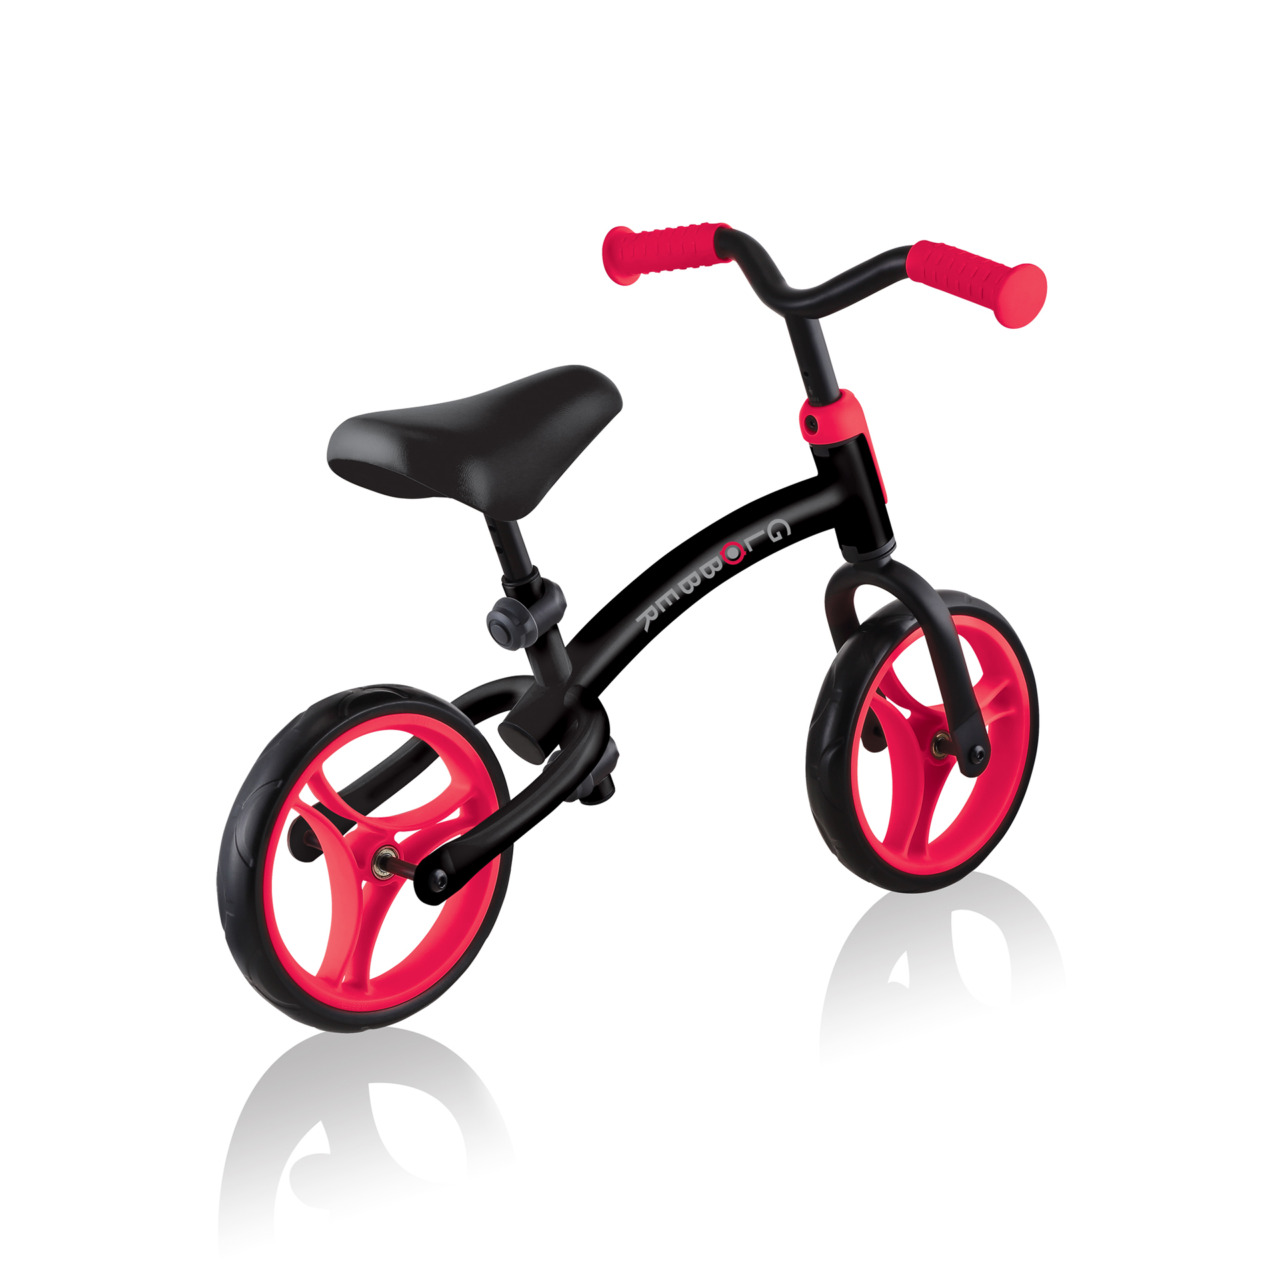 614 102 2 Adjustable Red Balance Bike For Toddlers